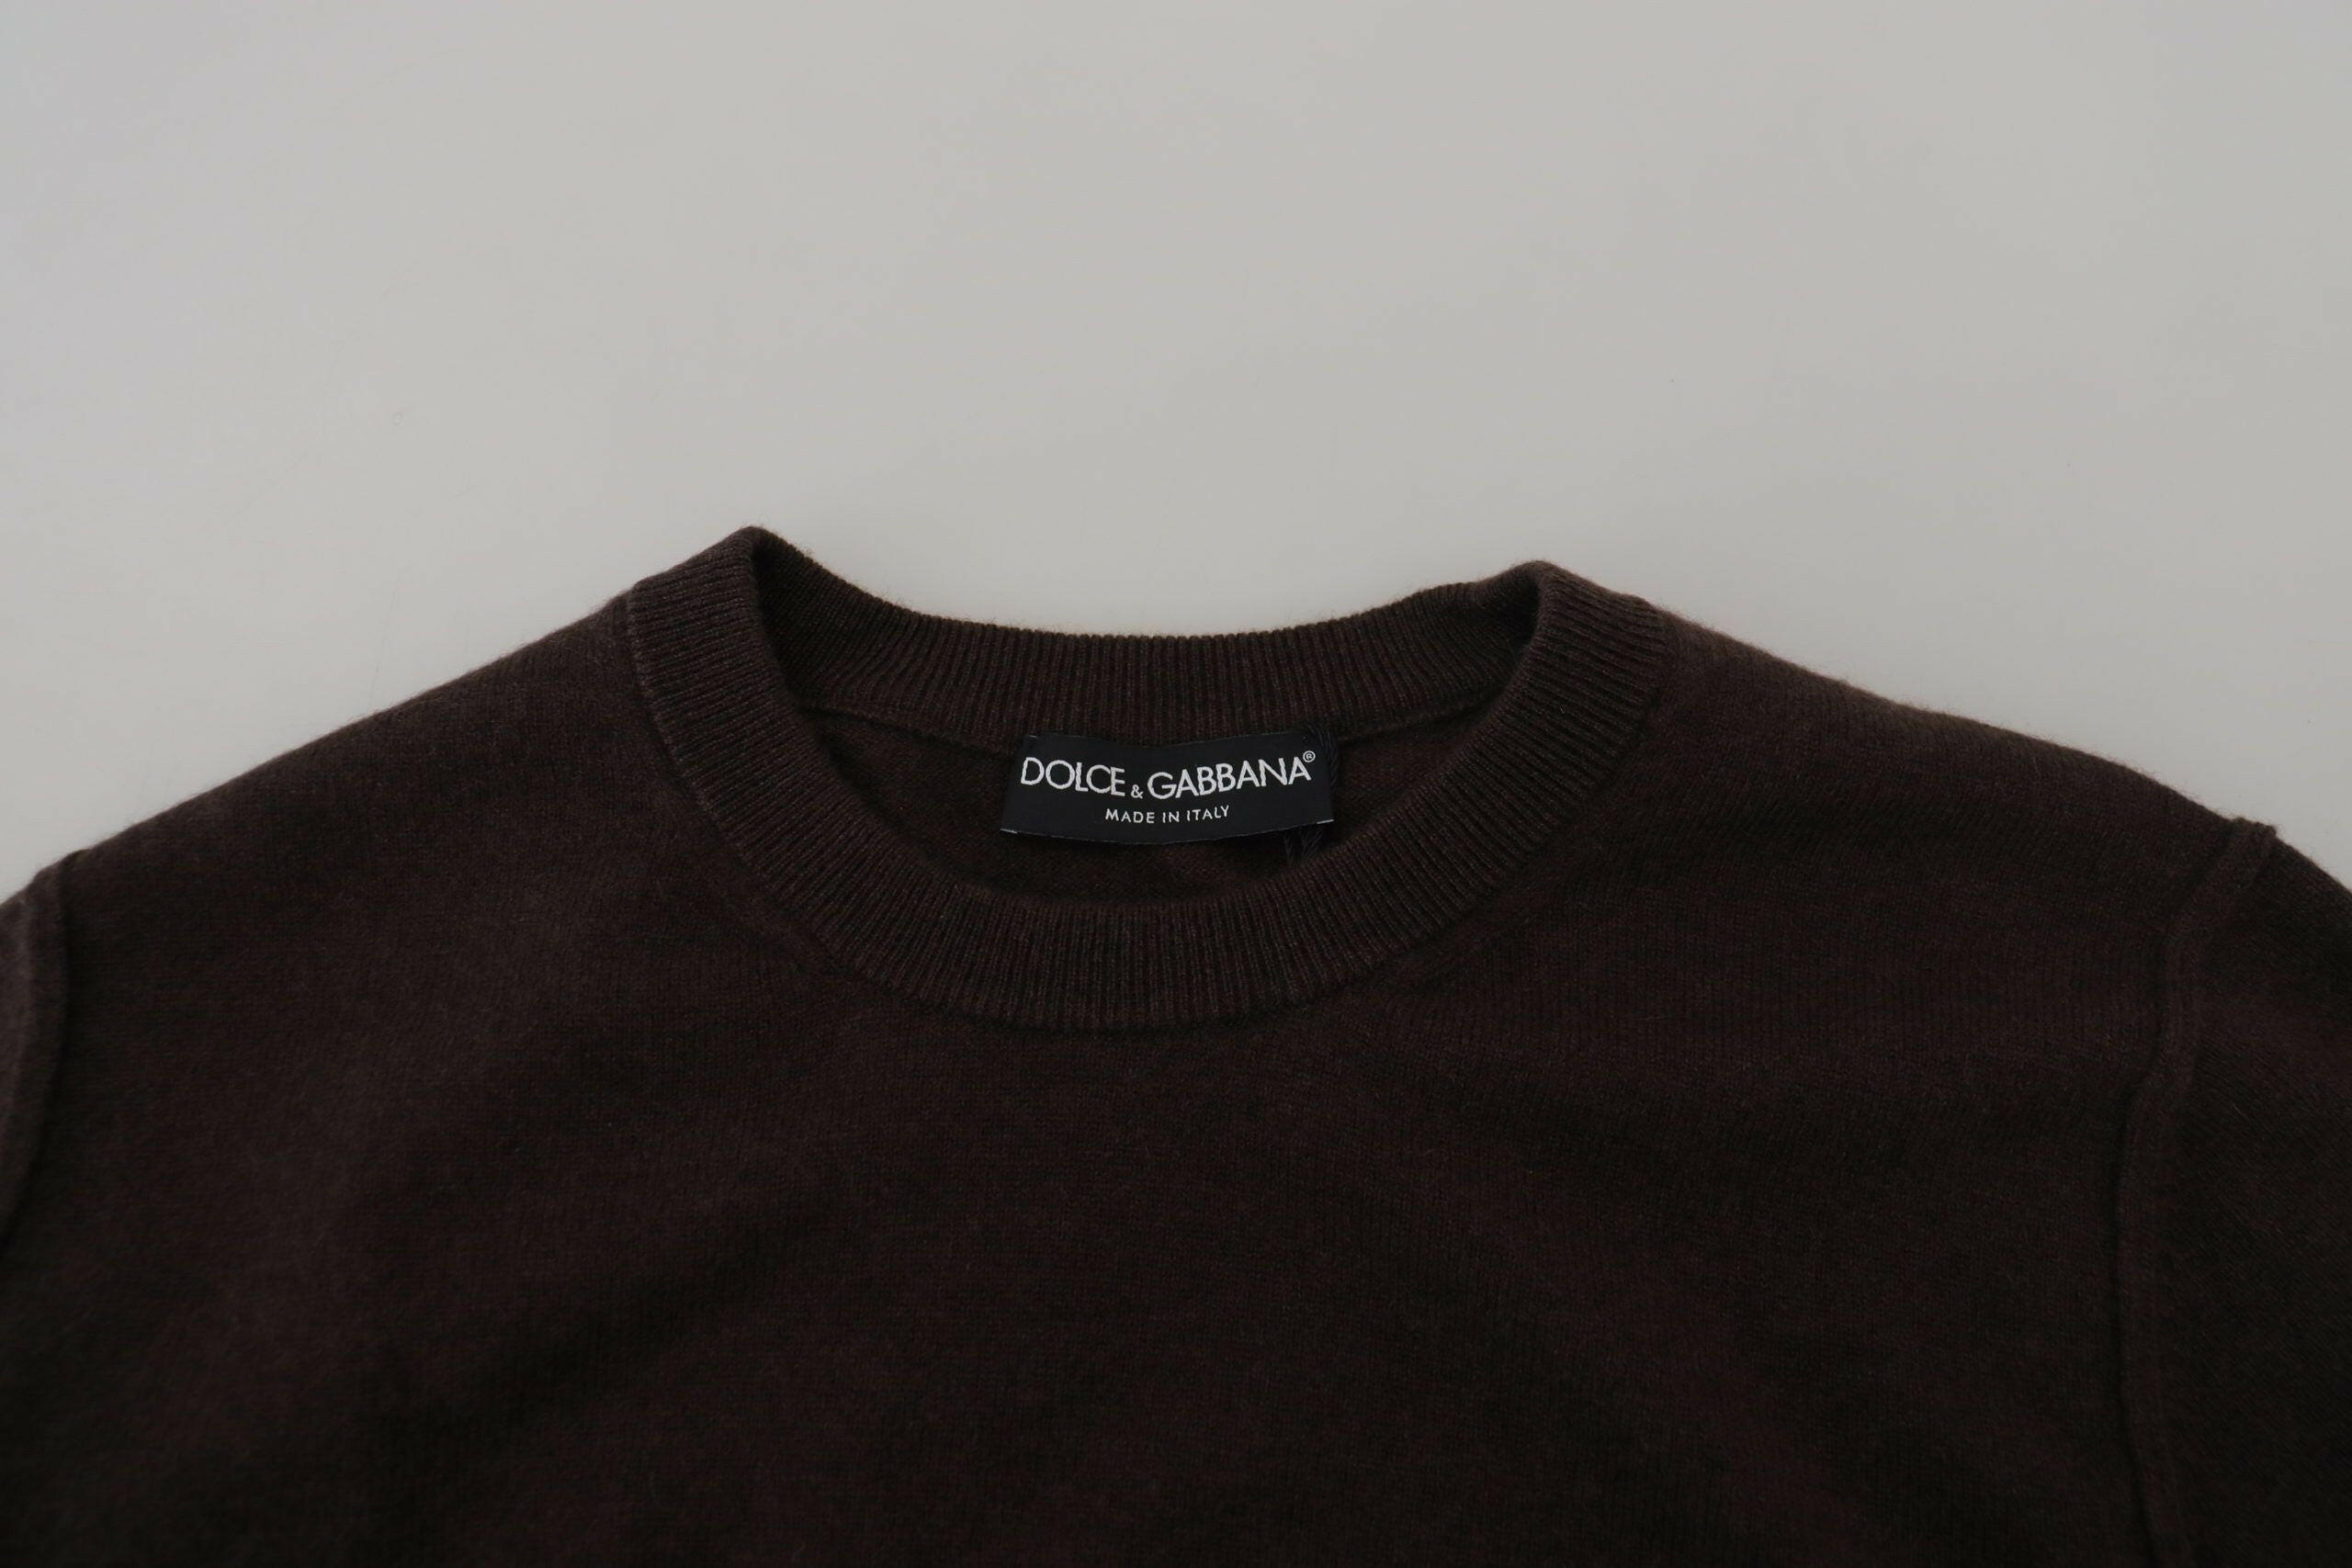 Dolce & Gabbana Brown Cashmere Crew Neck Pullover Sweater - GENUINE AUTHENTIC BRAND LLC  